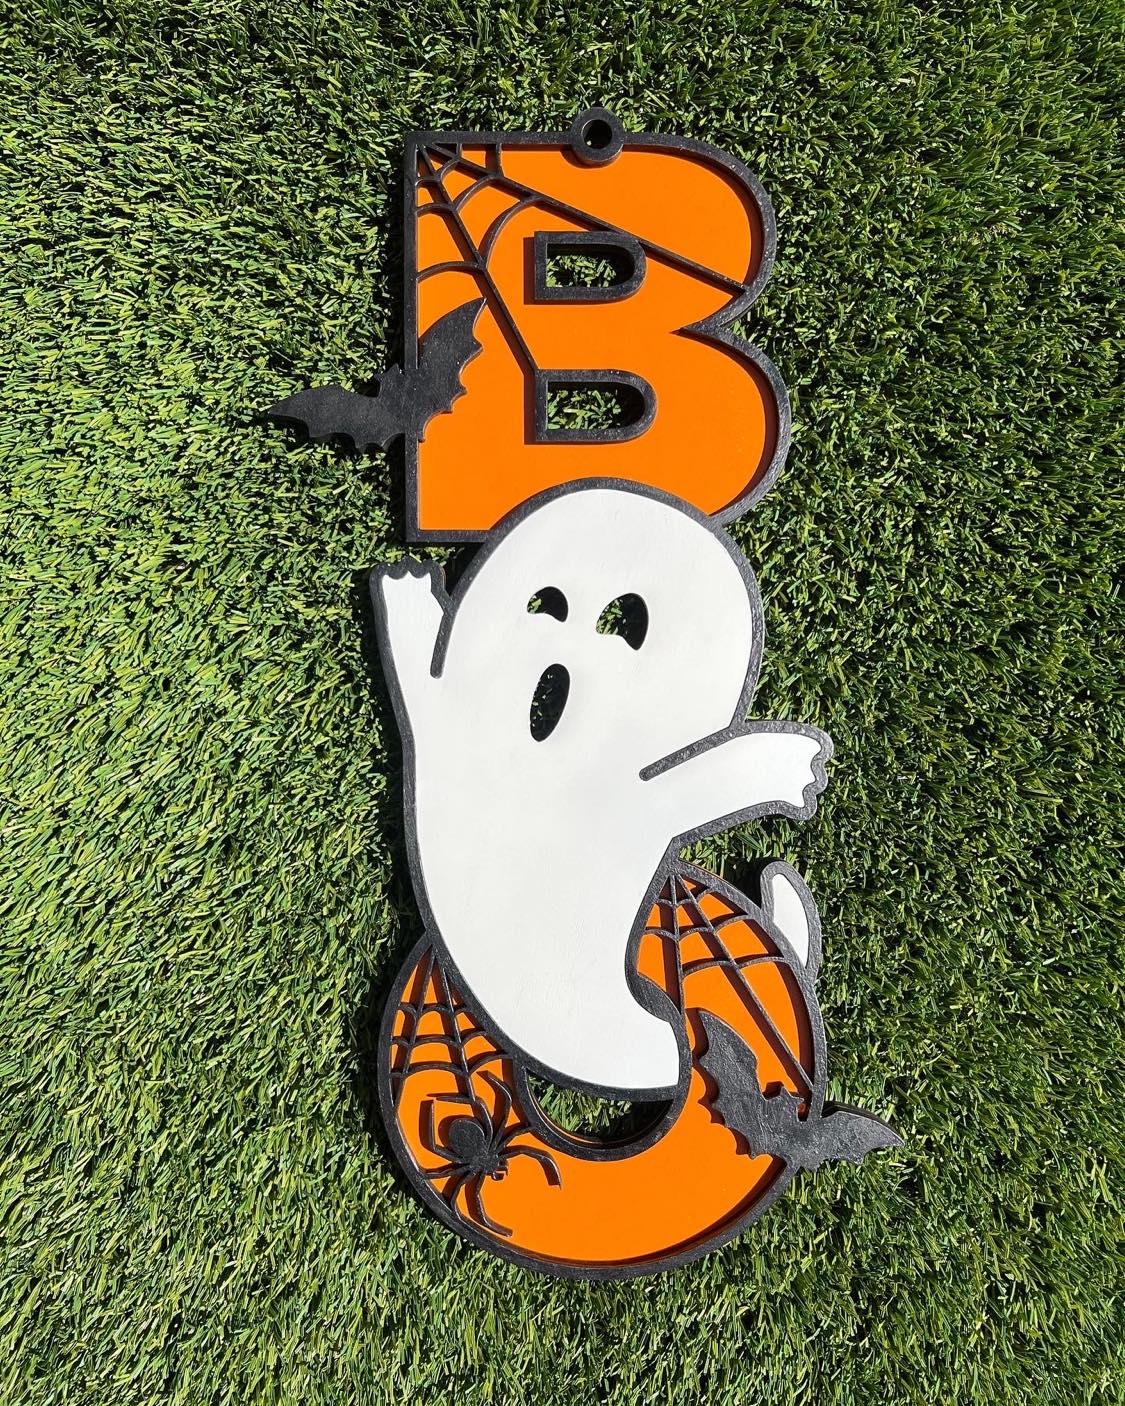 Halloween Boo Sign